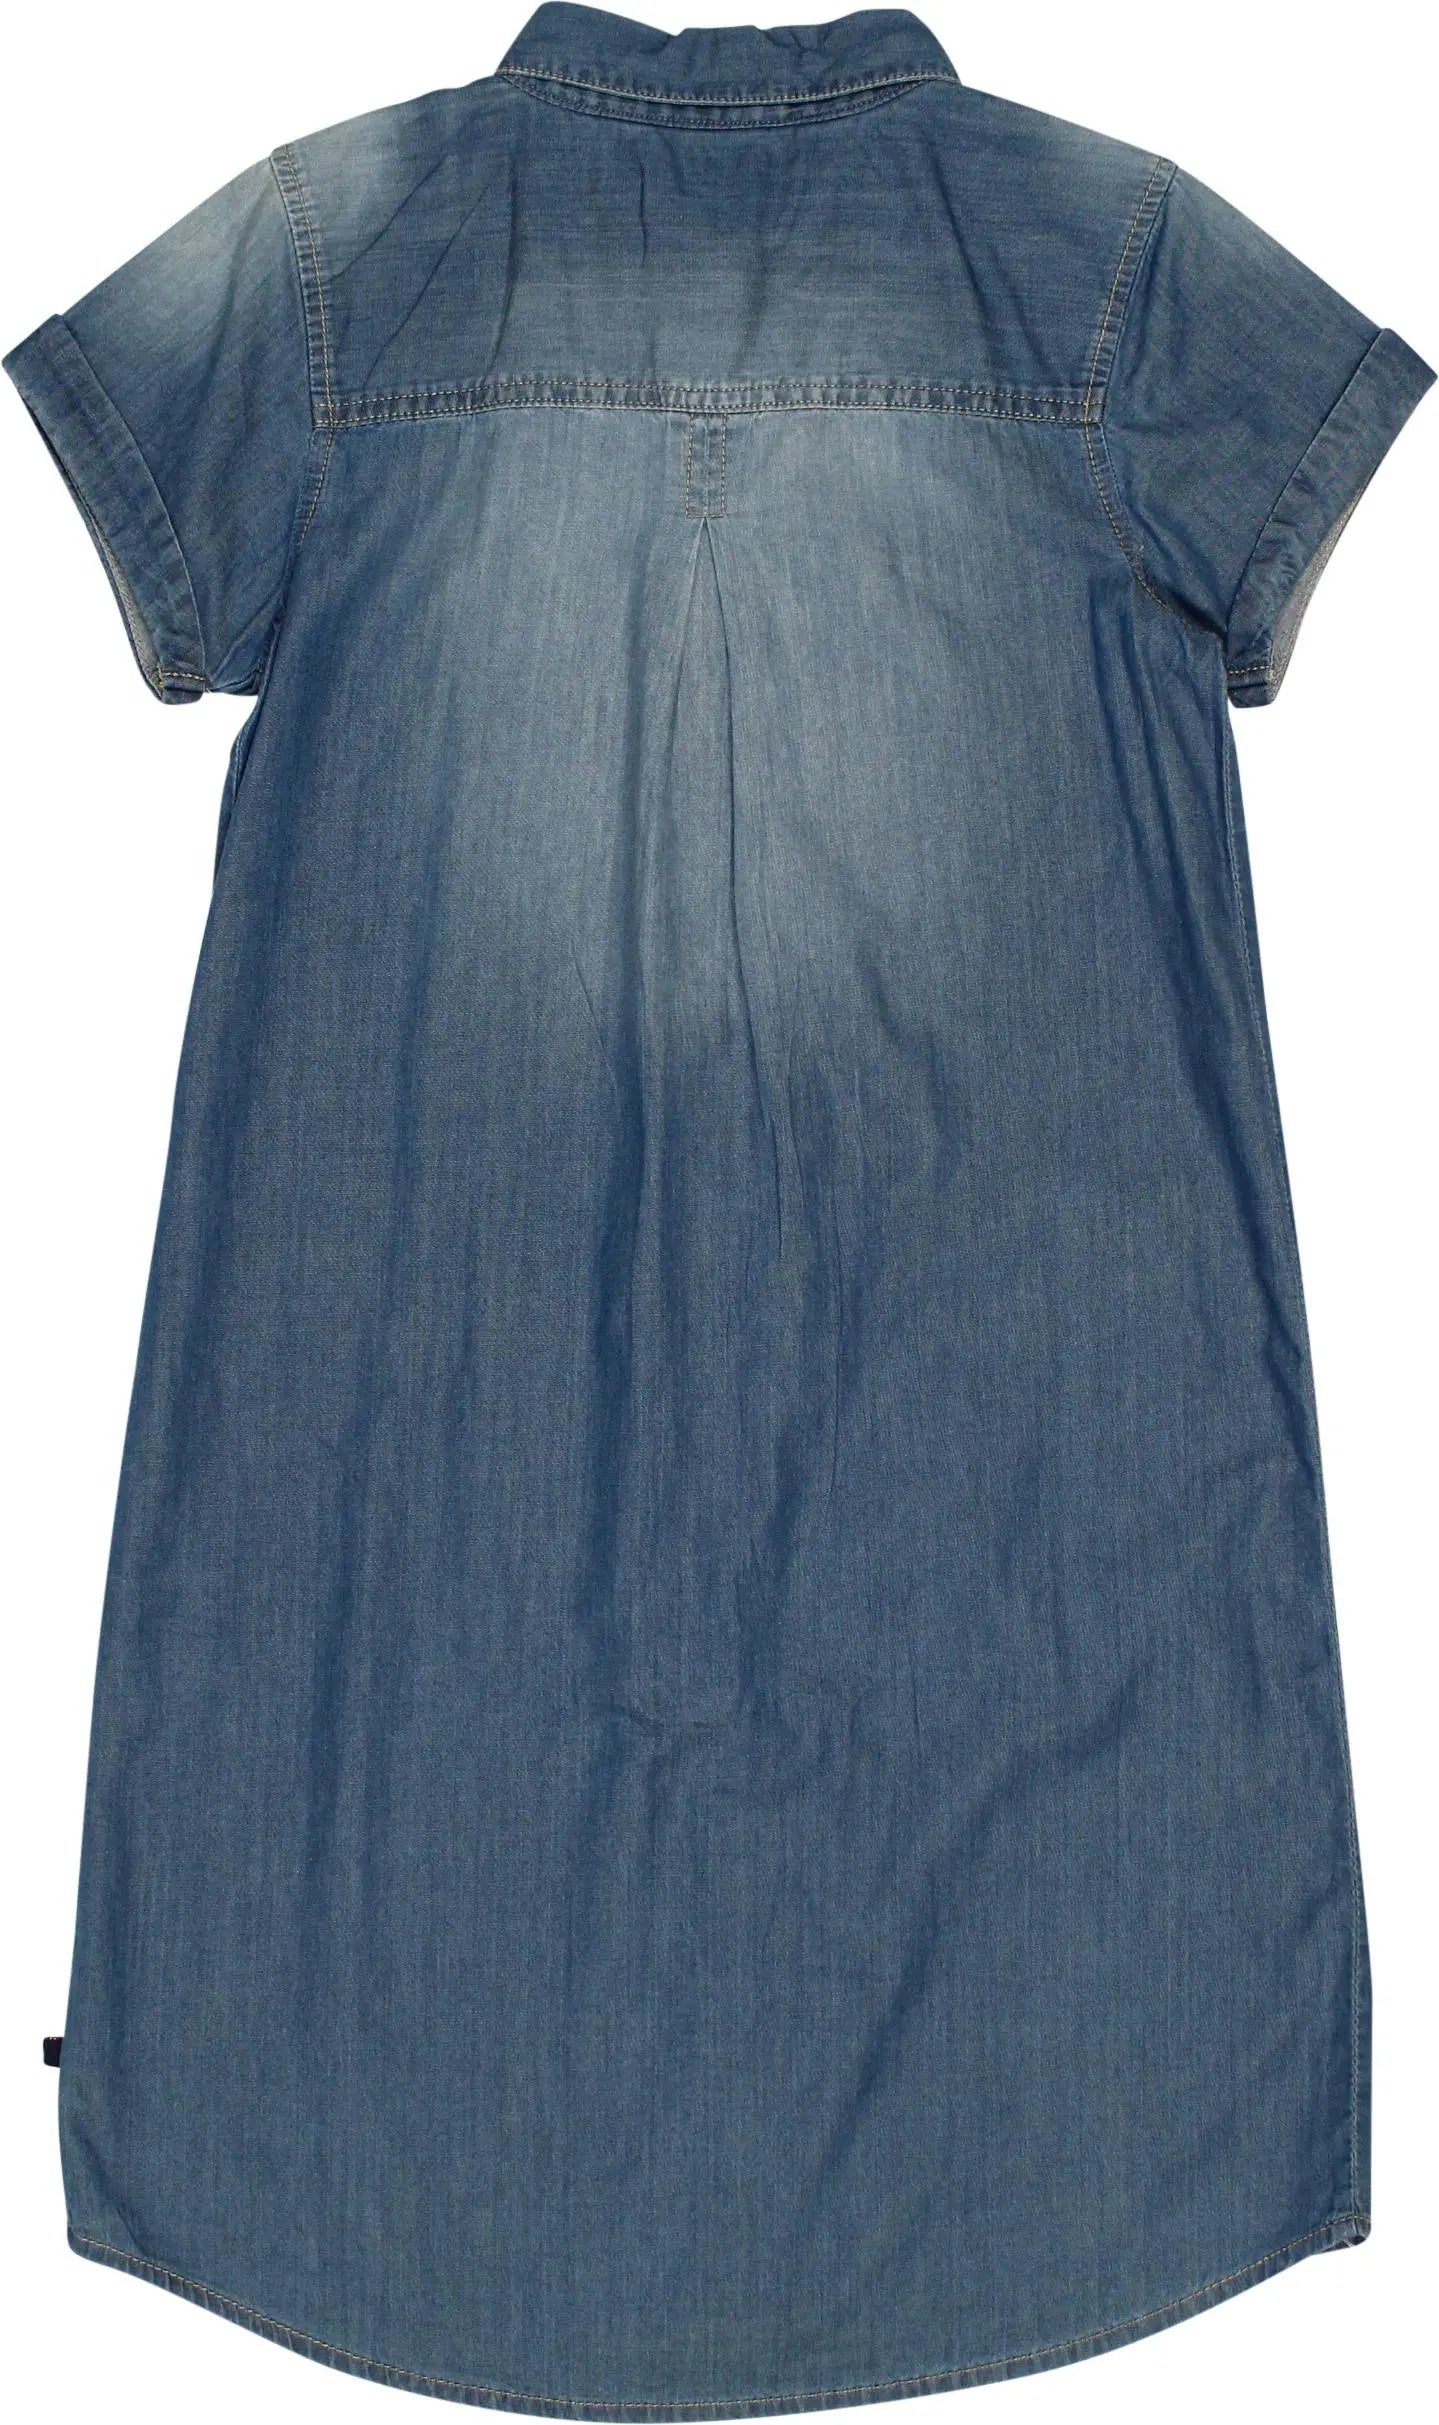 HEMA - Denim Short Sleeve Dress- ThriftTale.com - Vintage and second handclothing